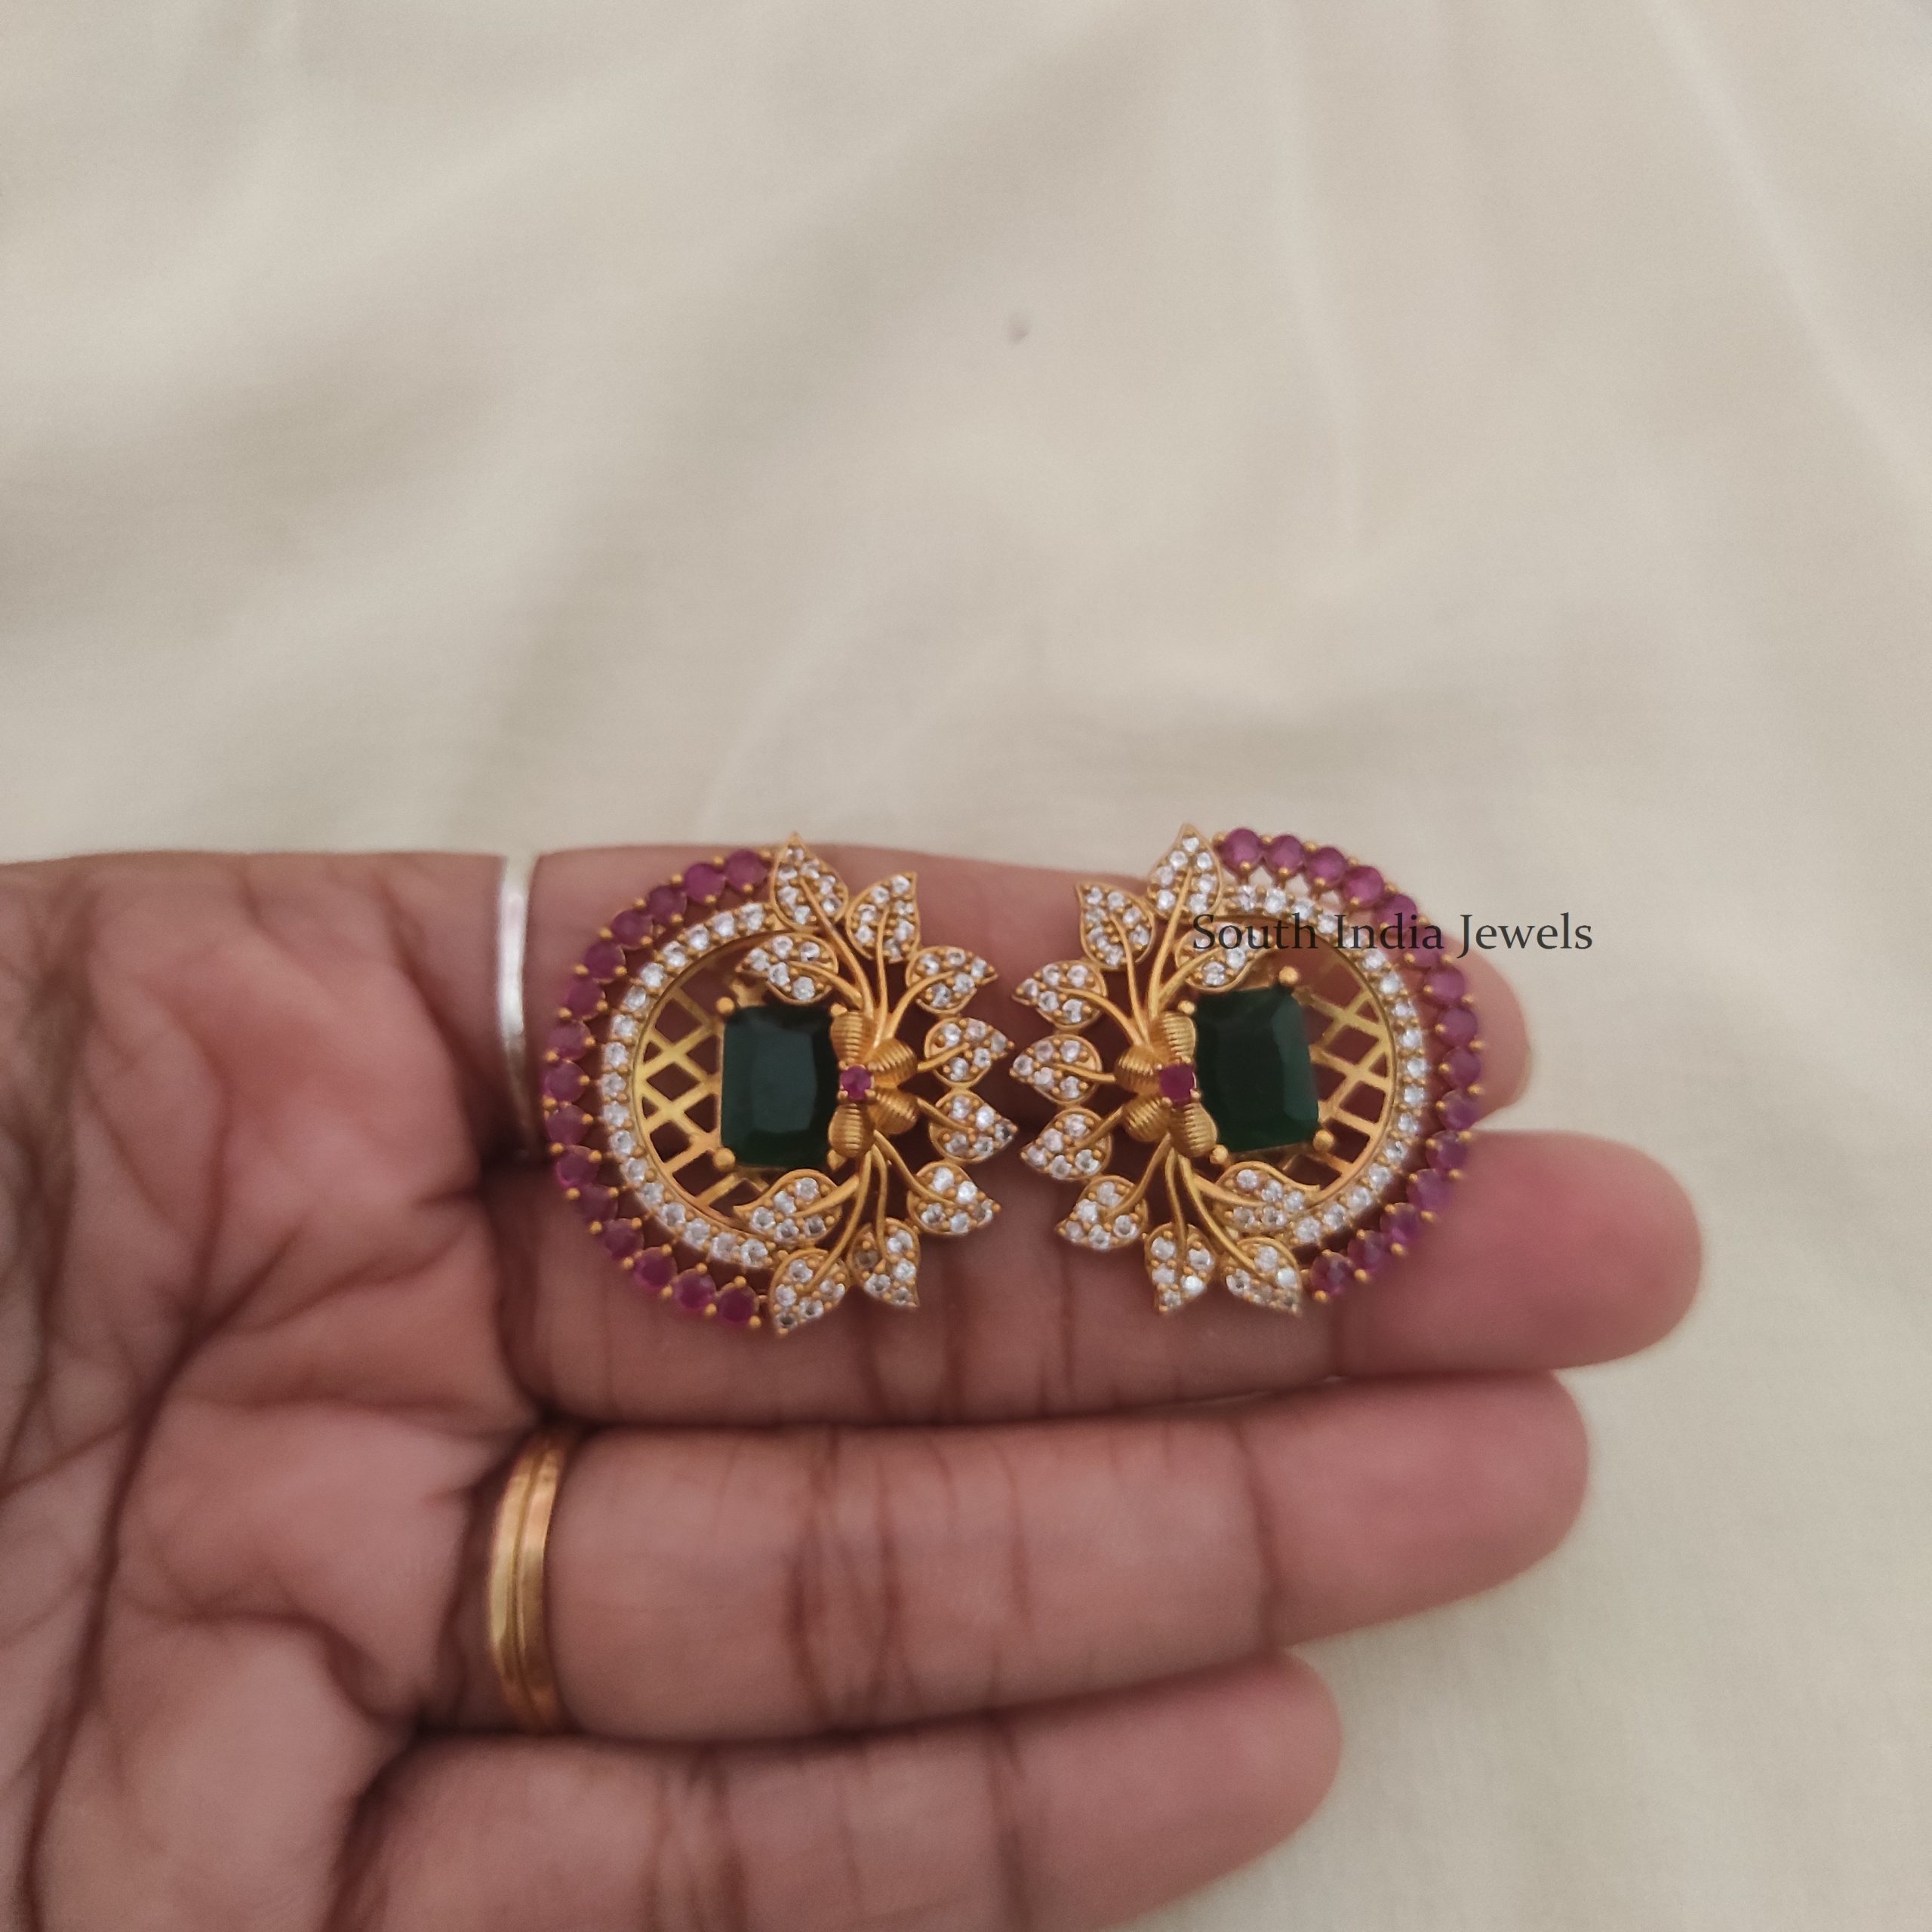 Shop Now Emerald Green Gold Polish Stud Earrings